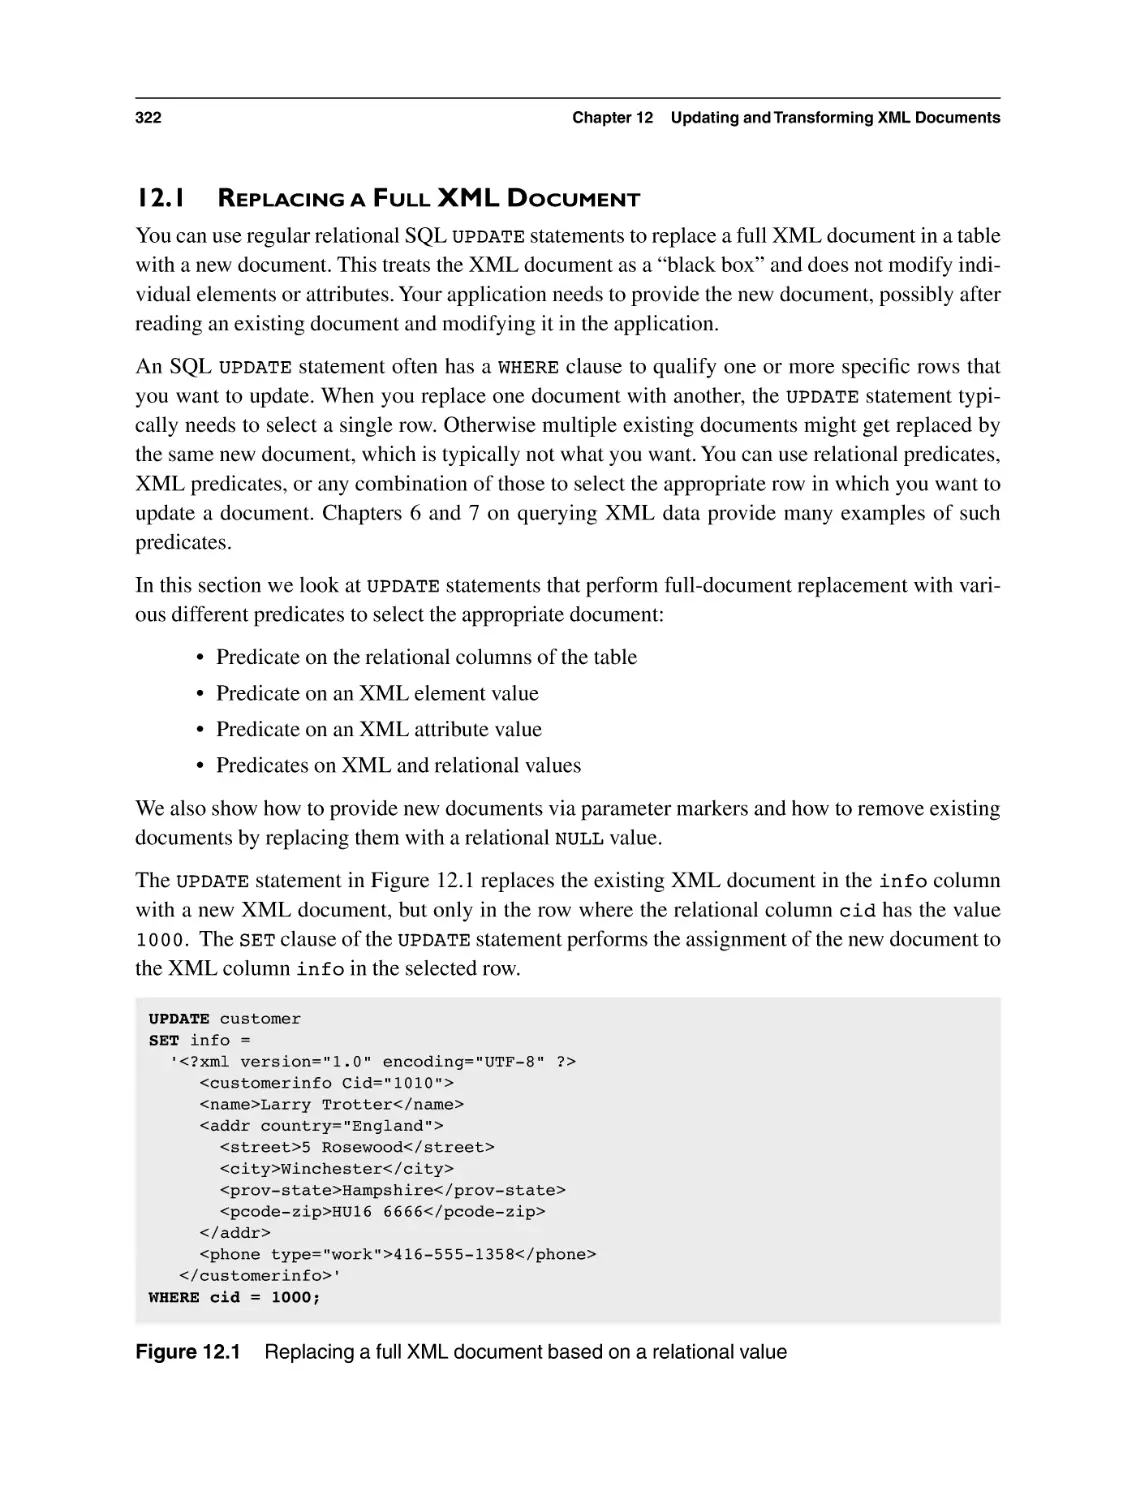 12.1 Replacing a Full XML Document